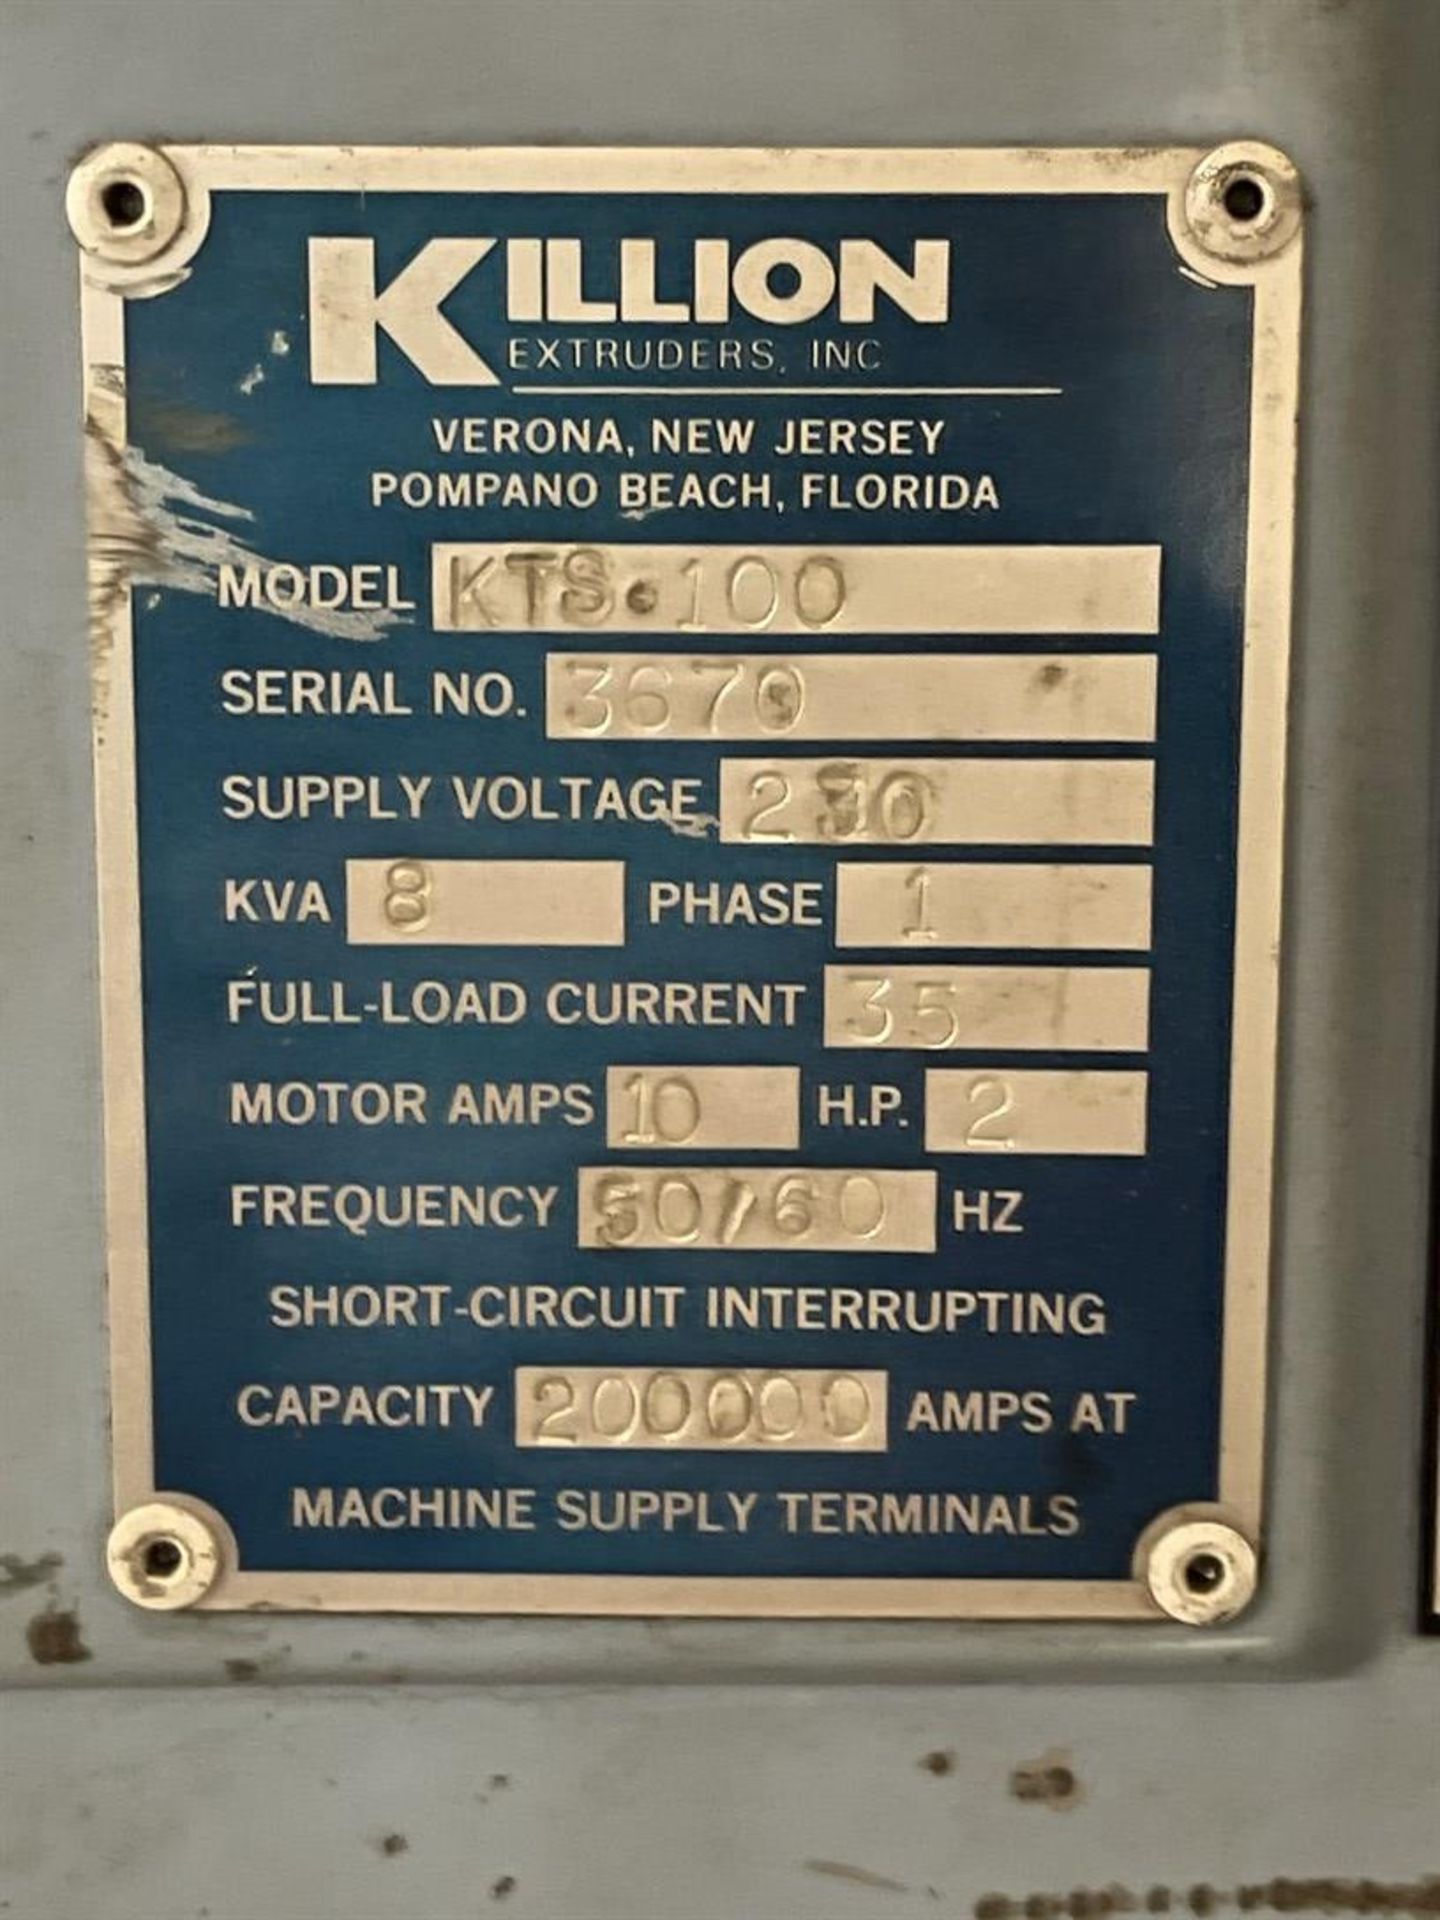 Killion KTS-100 1" Side Extruder, s/n 3670 - Image 5 of 5